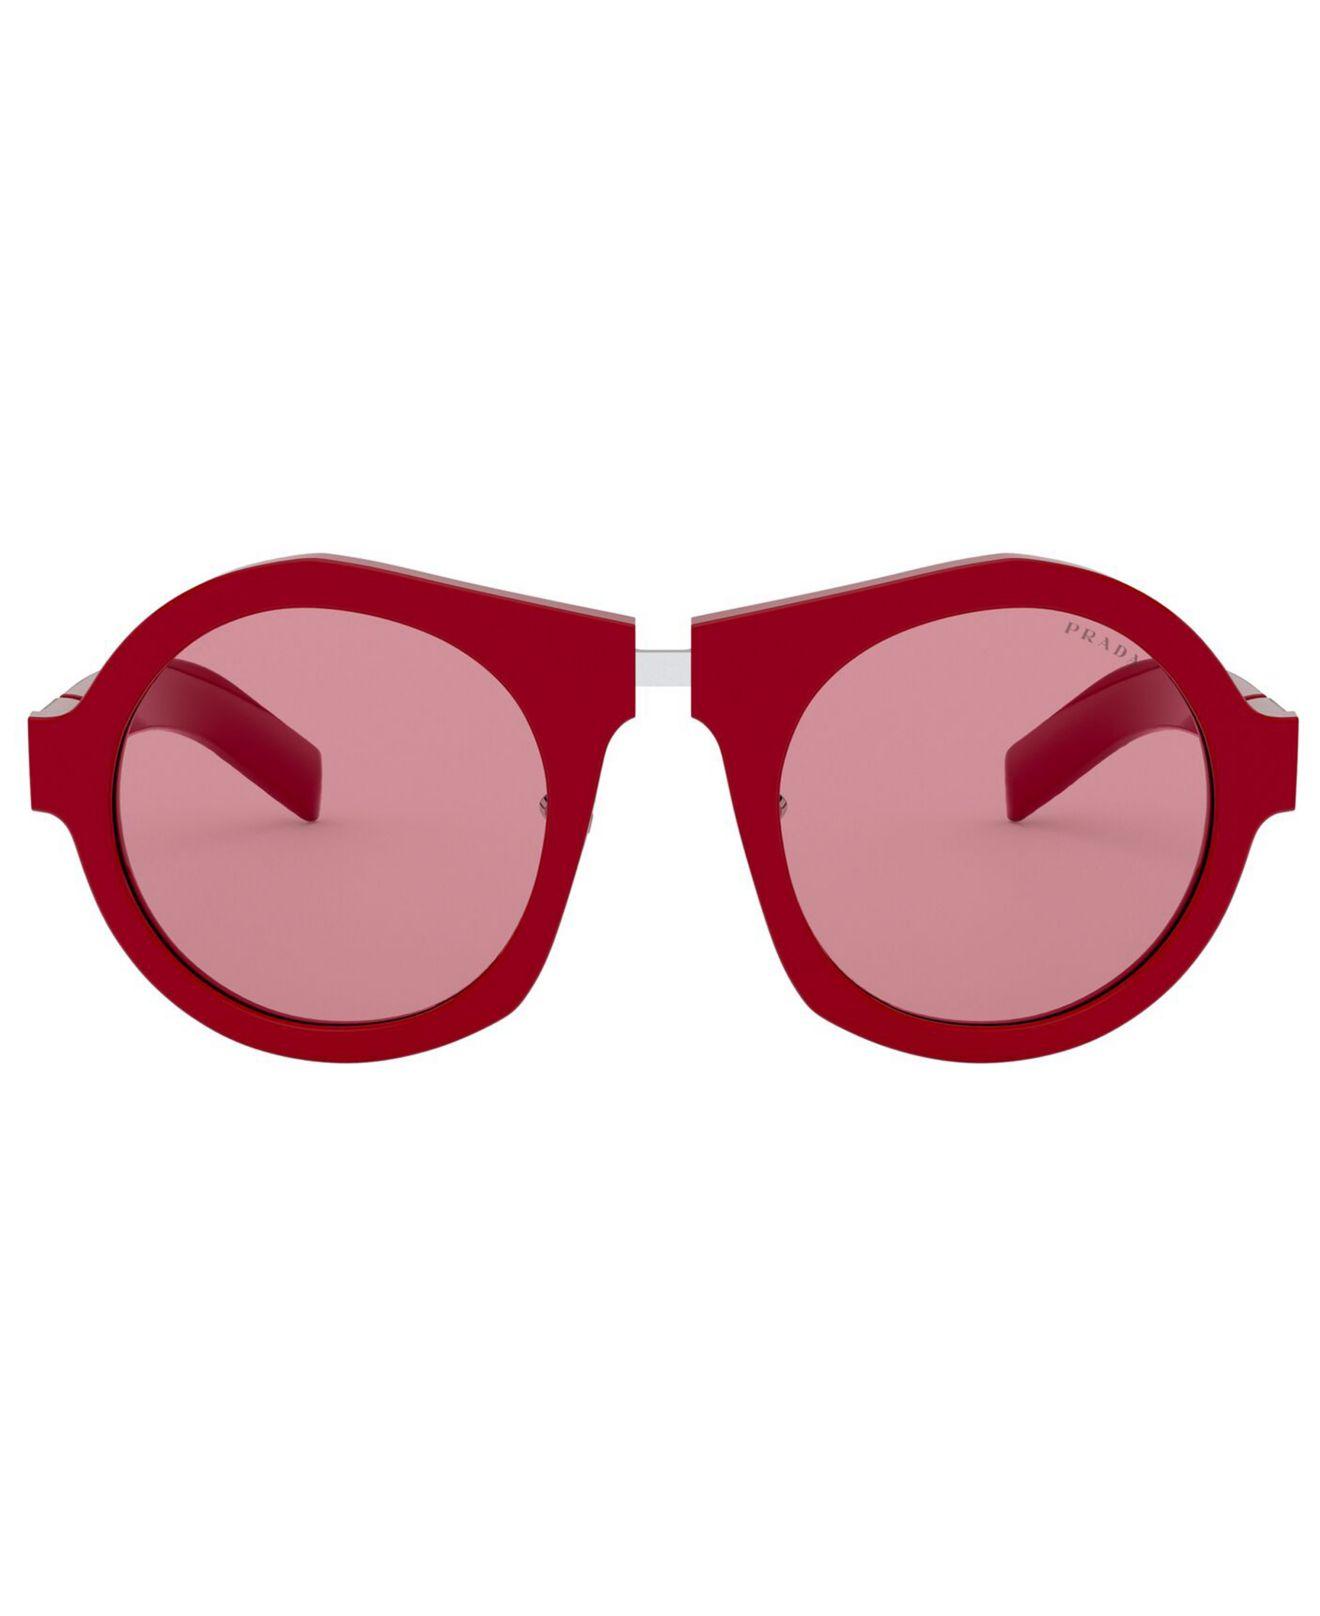 Prada Sunglasses, Pr 10xs in Red | Lyst